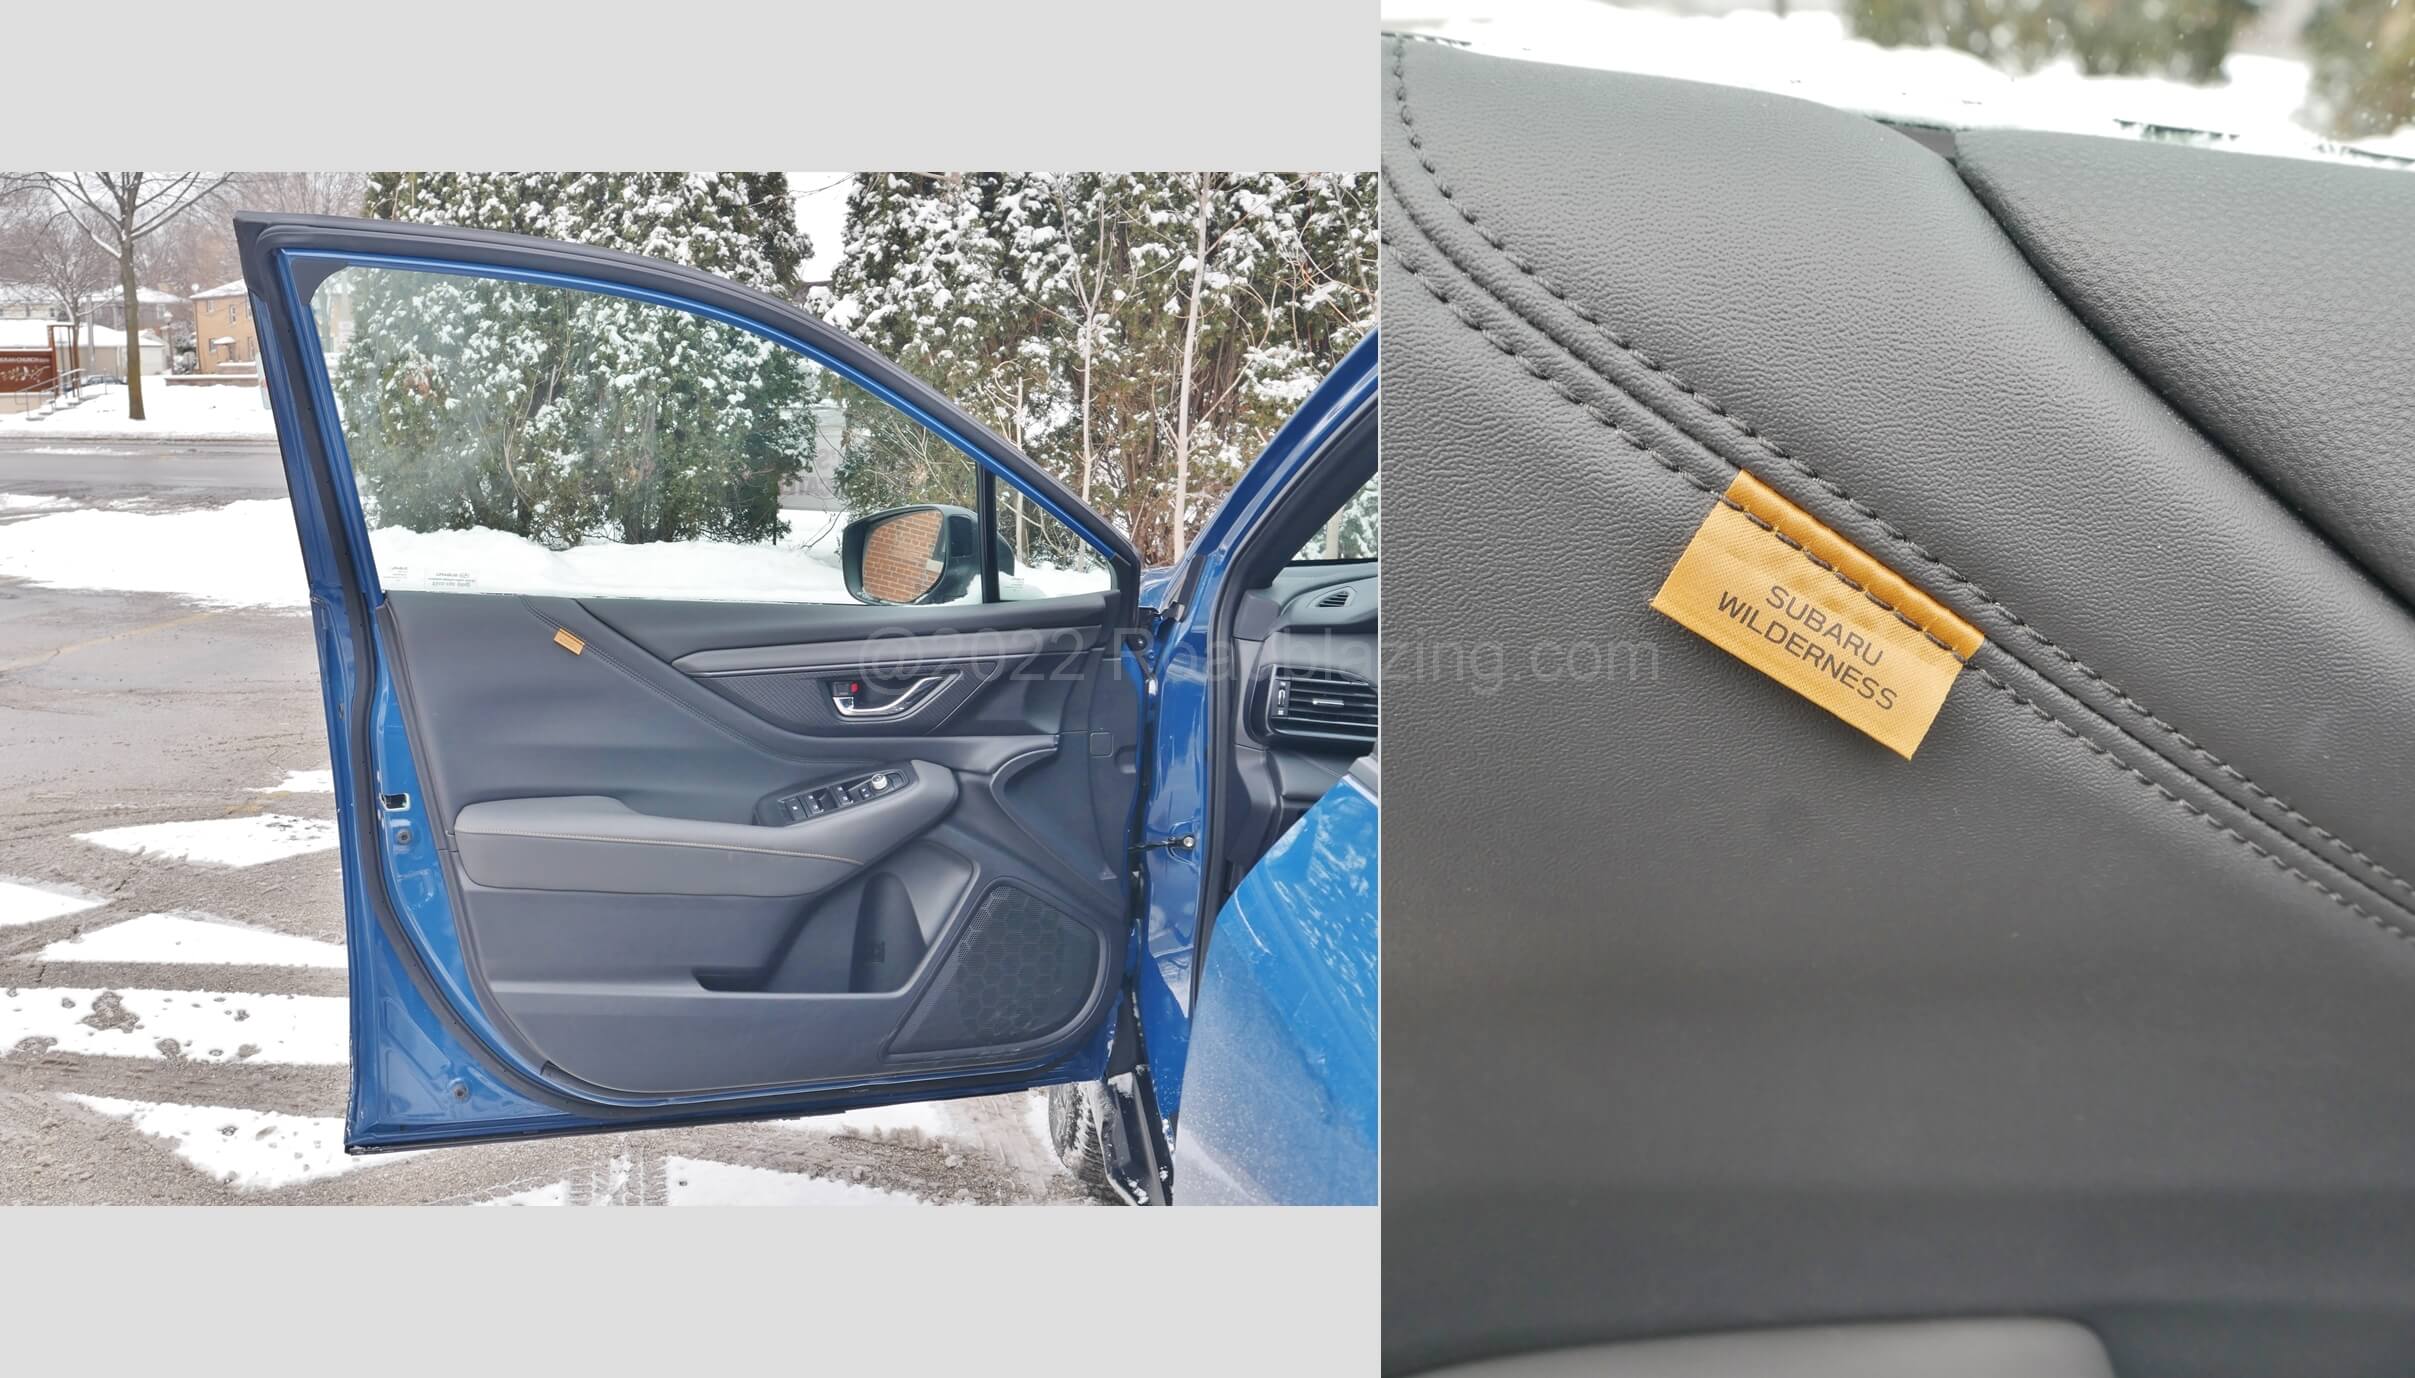 2022 Subaru Outback Wilderness: "WILD" front door panel tags